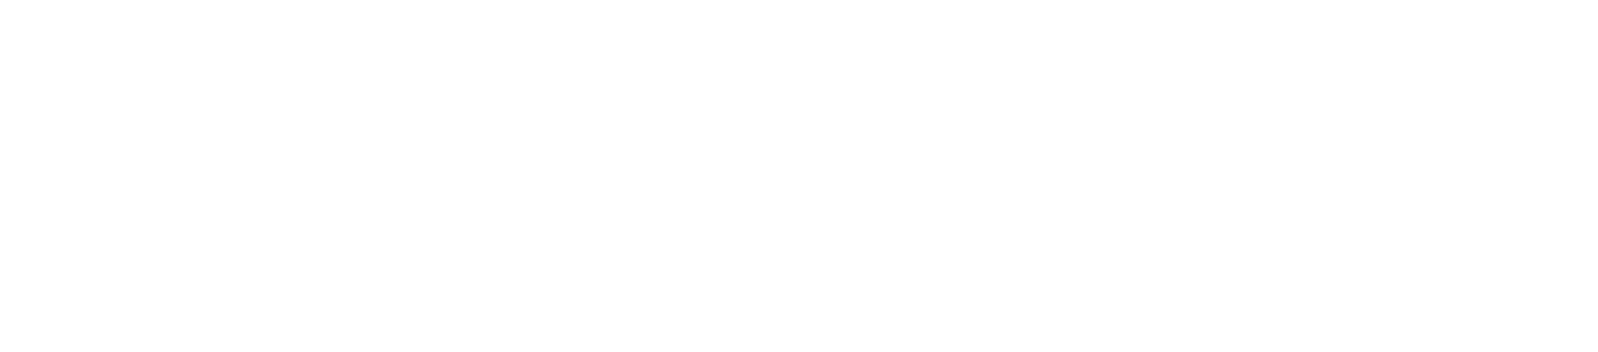 Old Mutual logo grand pour les fonds sombres (PNG transparent)